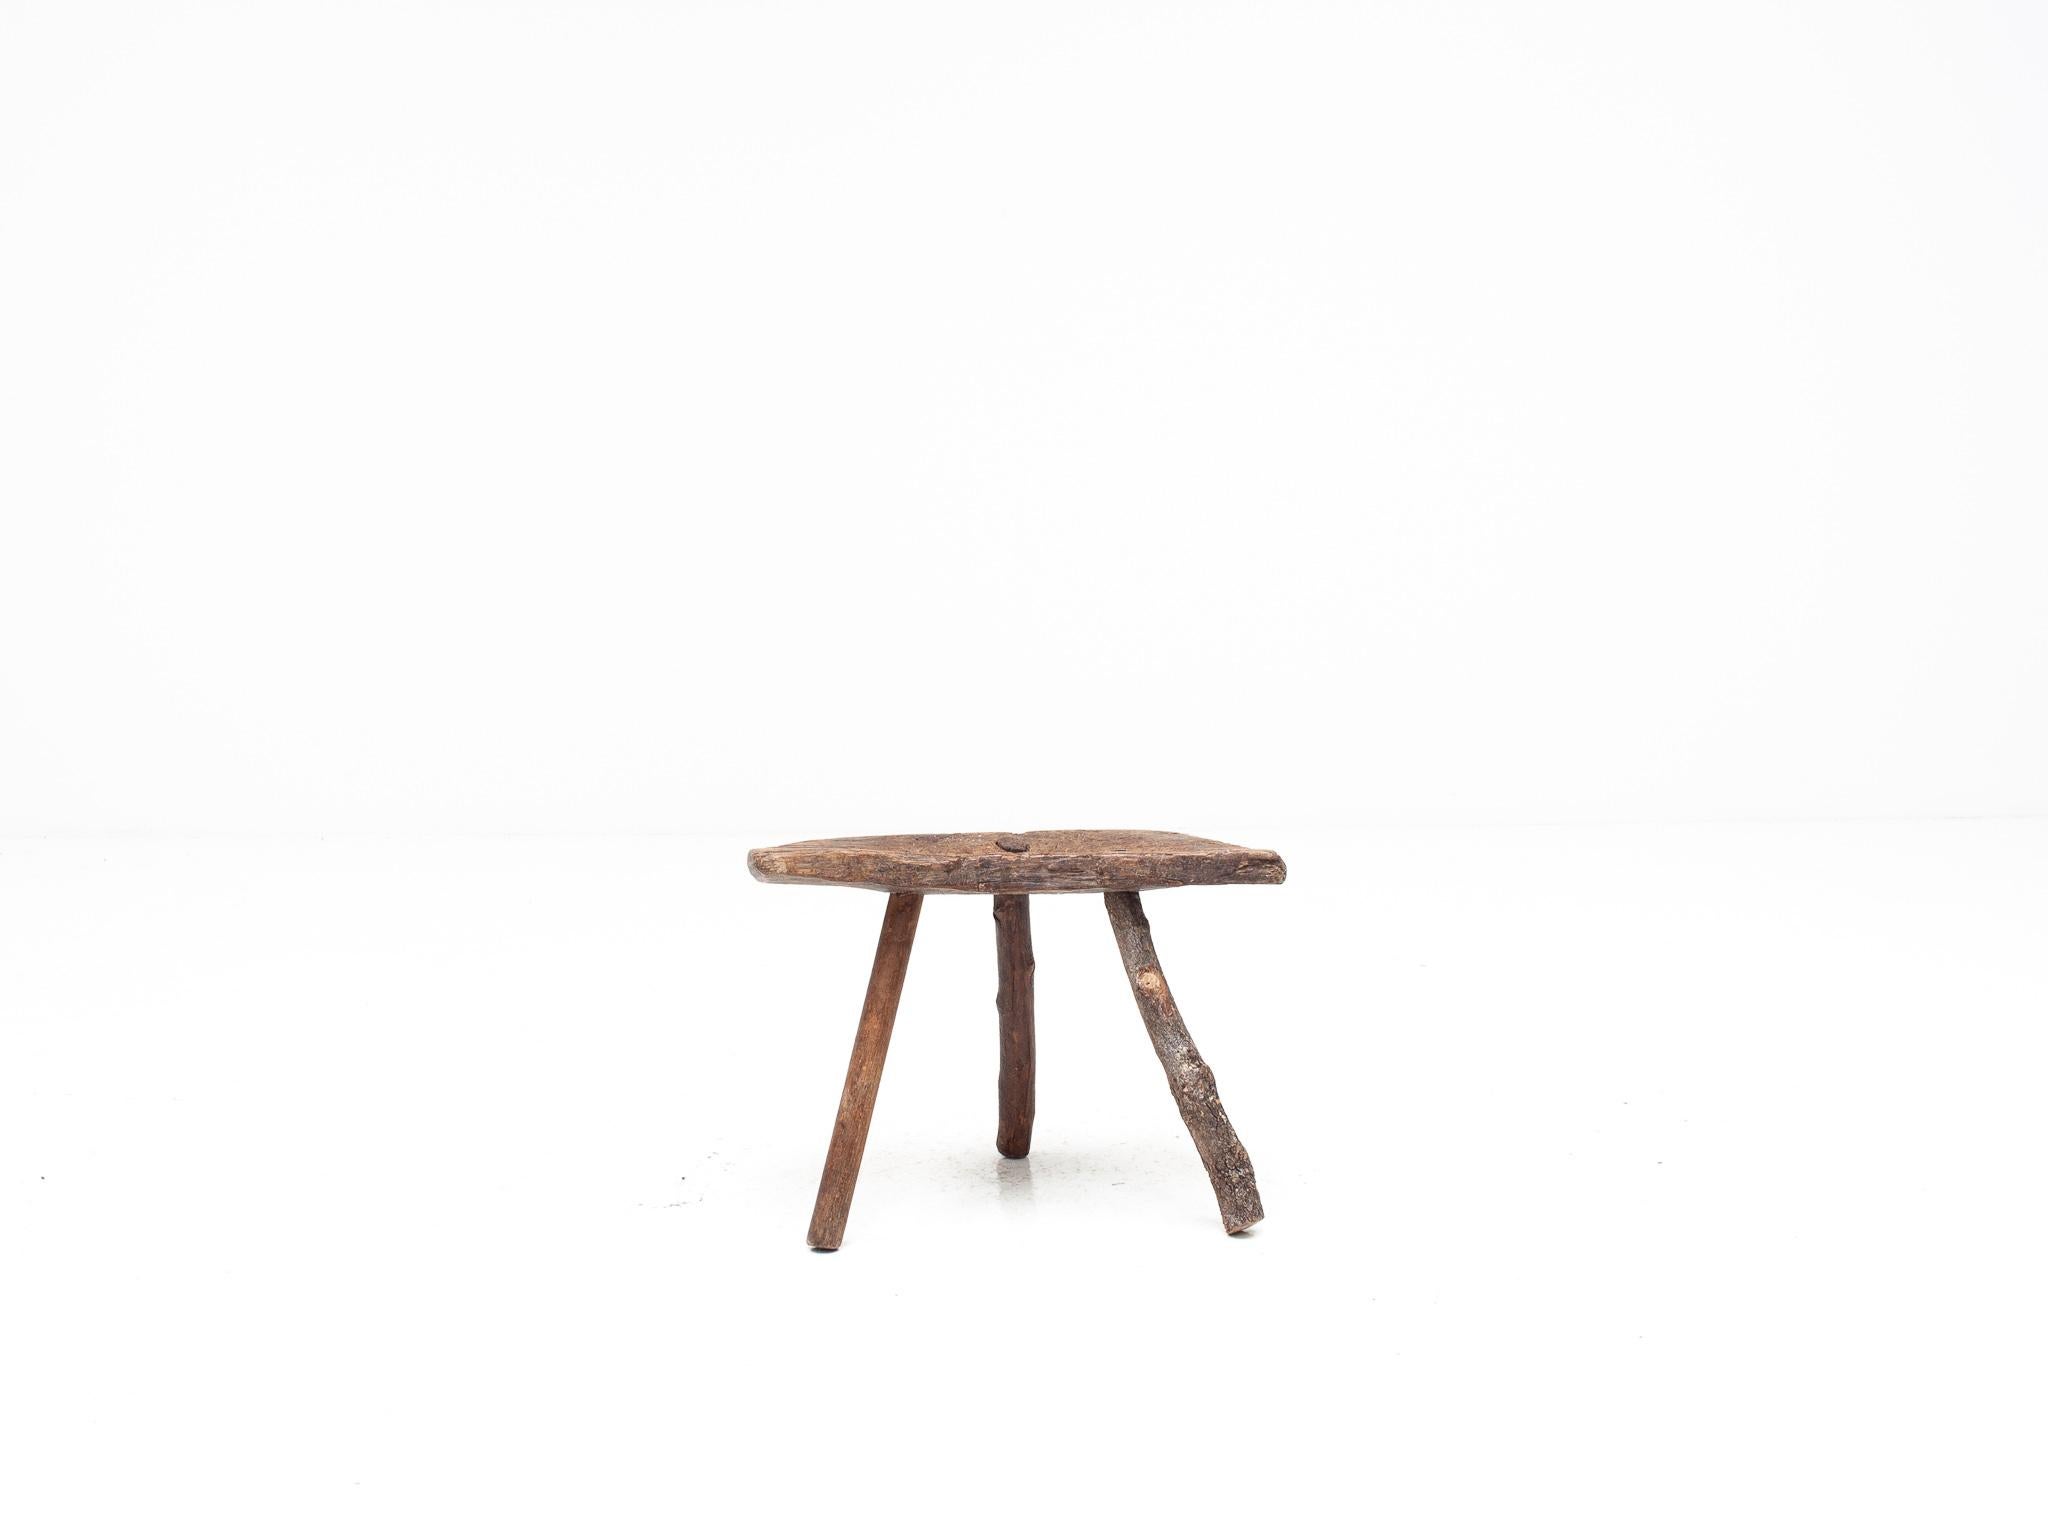 Wood Rustic, Primitive, Wabi Sabi, Naive Vintage Stool, Table, Italy, c1800s For Sale